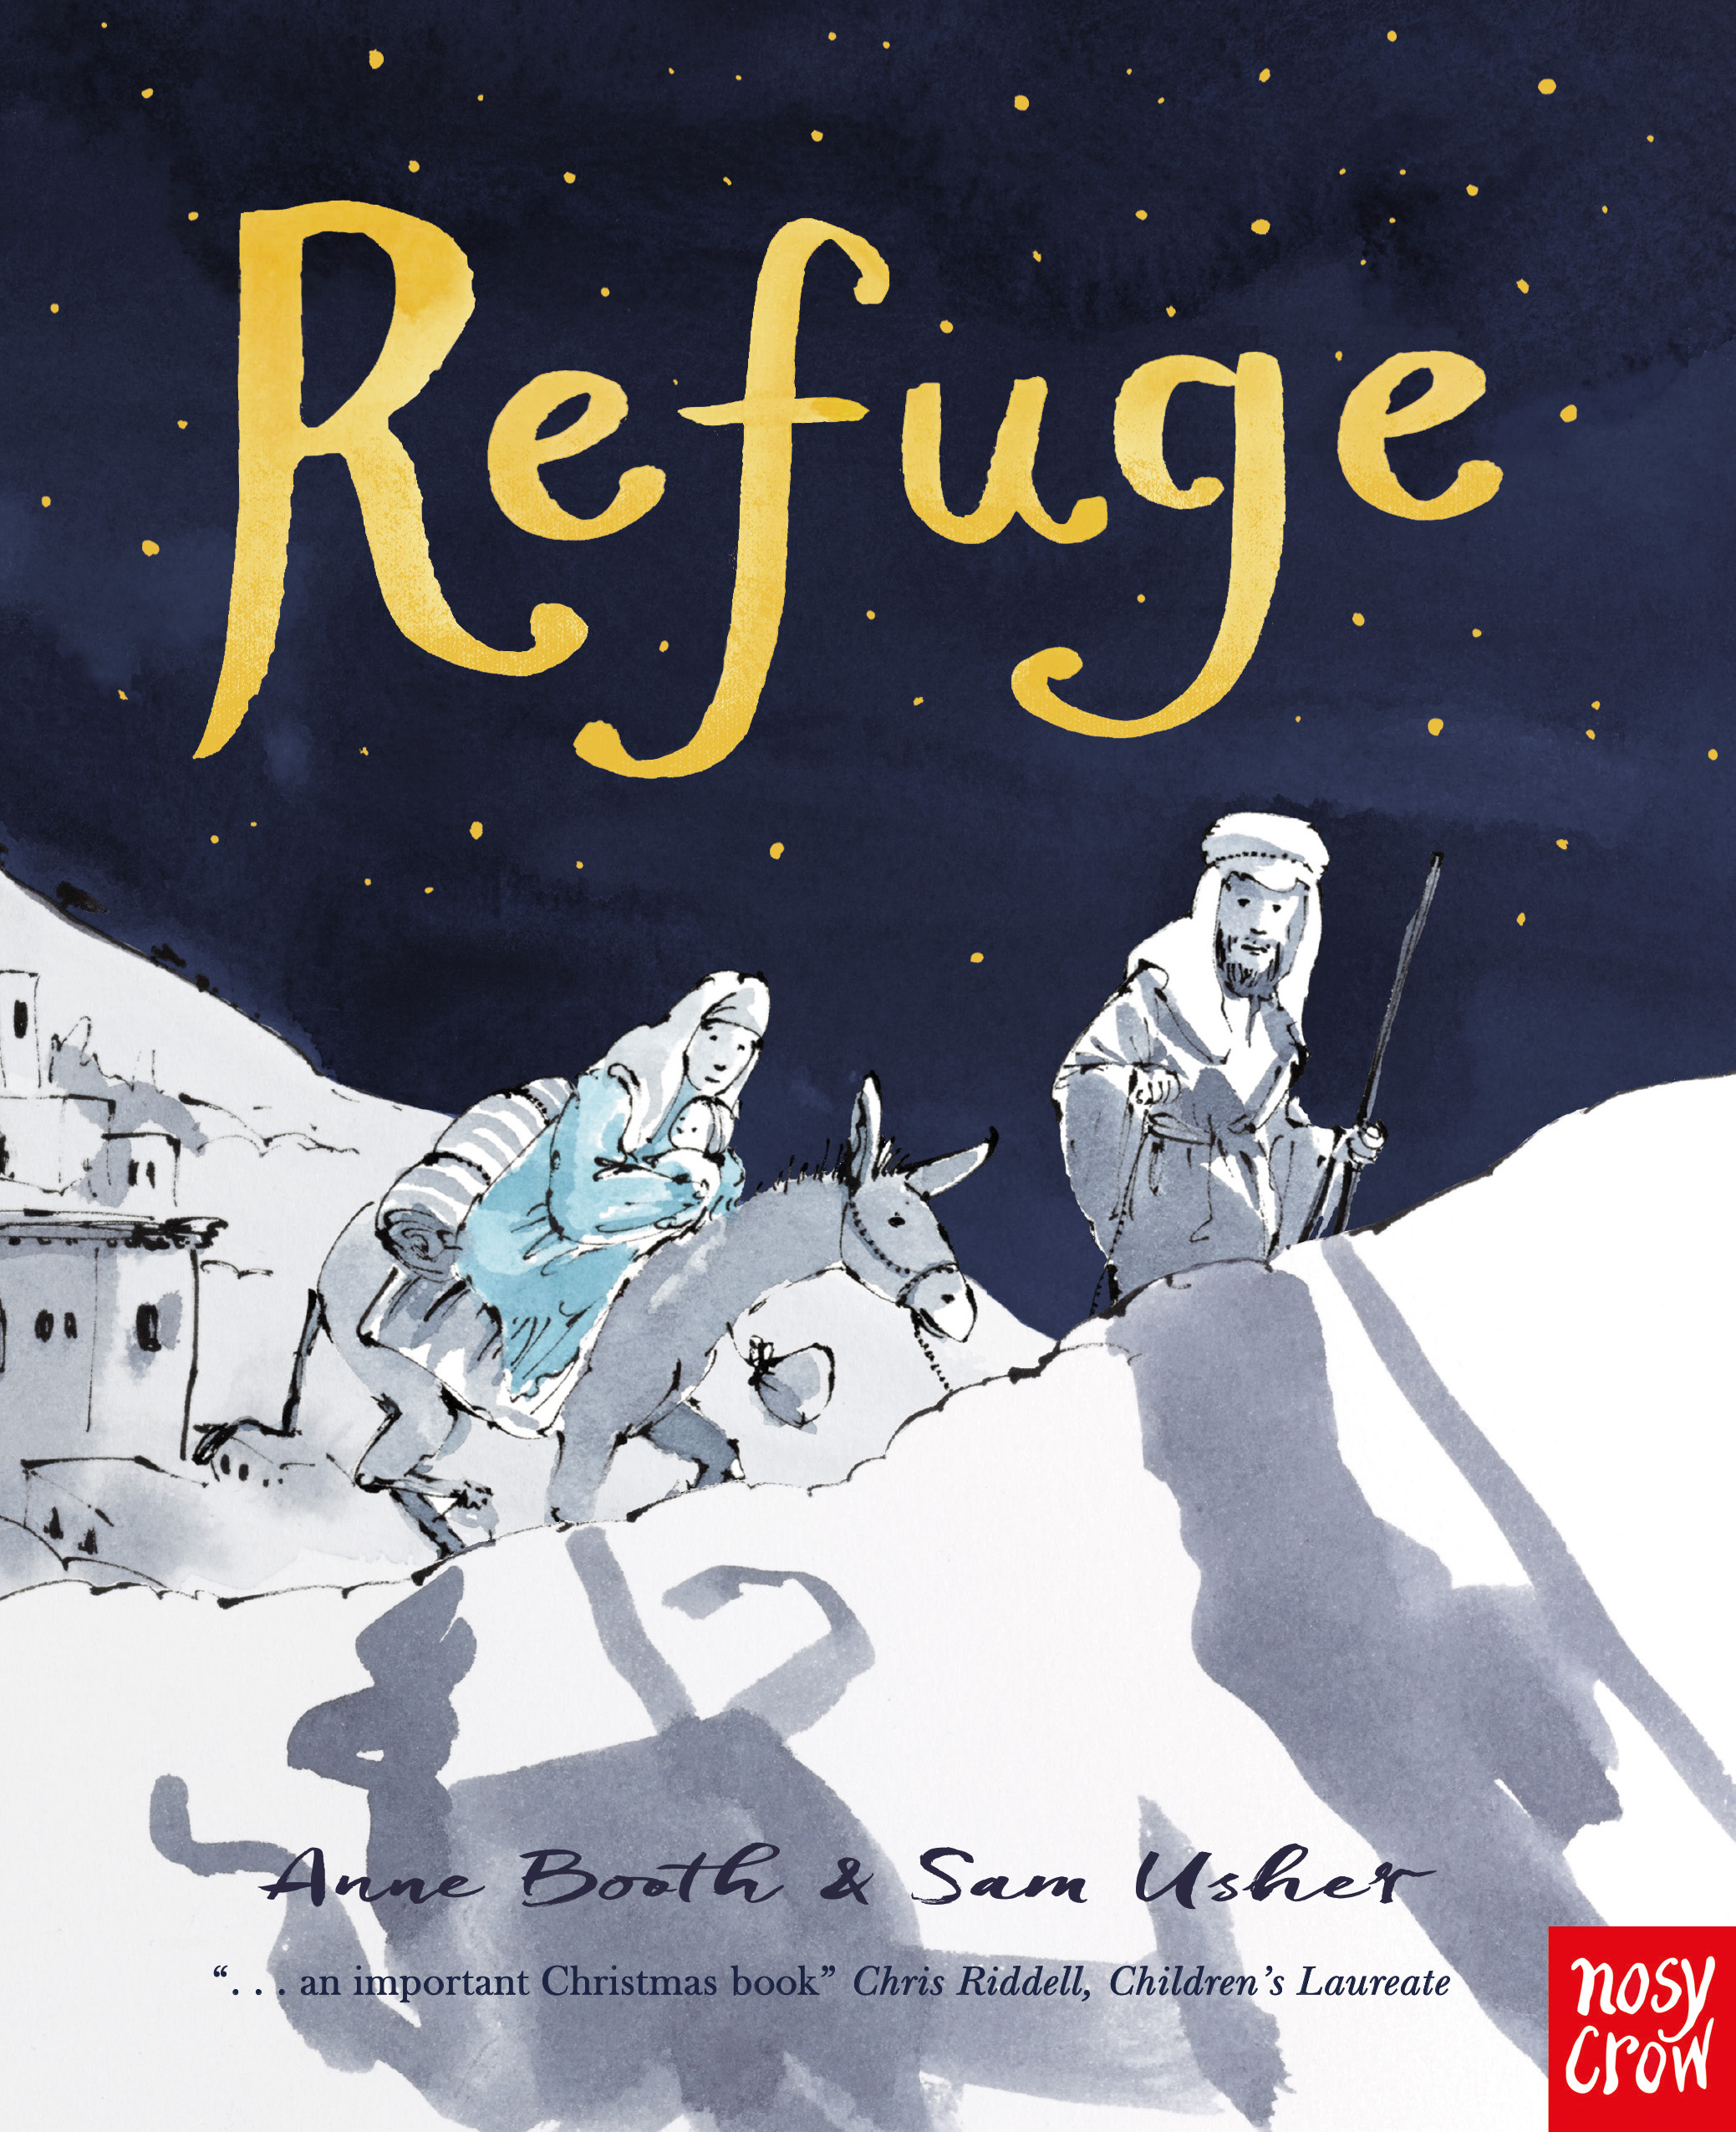 Refuge | Anne Booth & Sam Usher | Christmas books | Nosy Crow